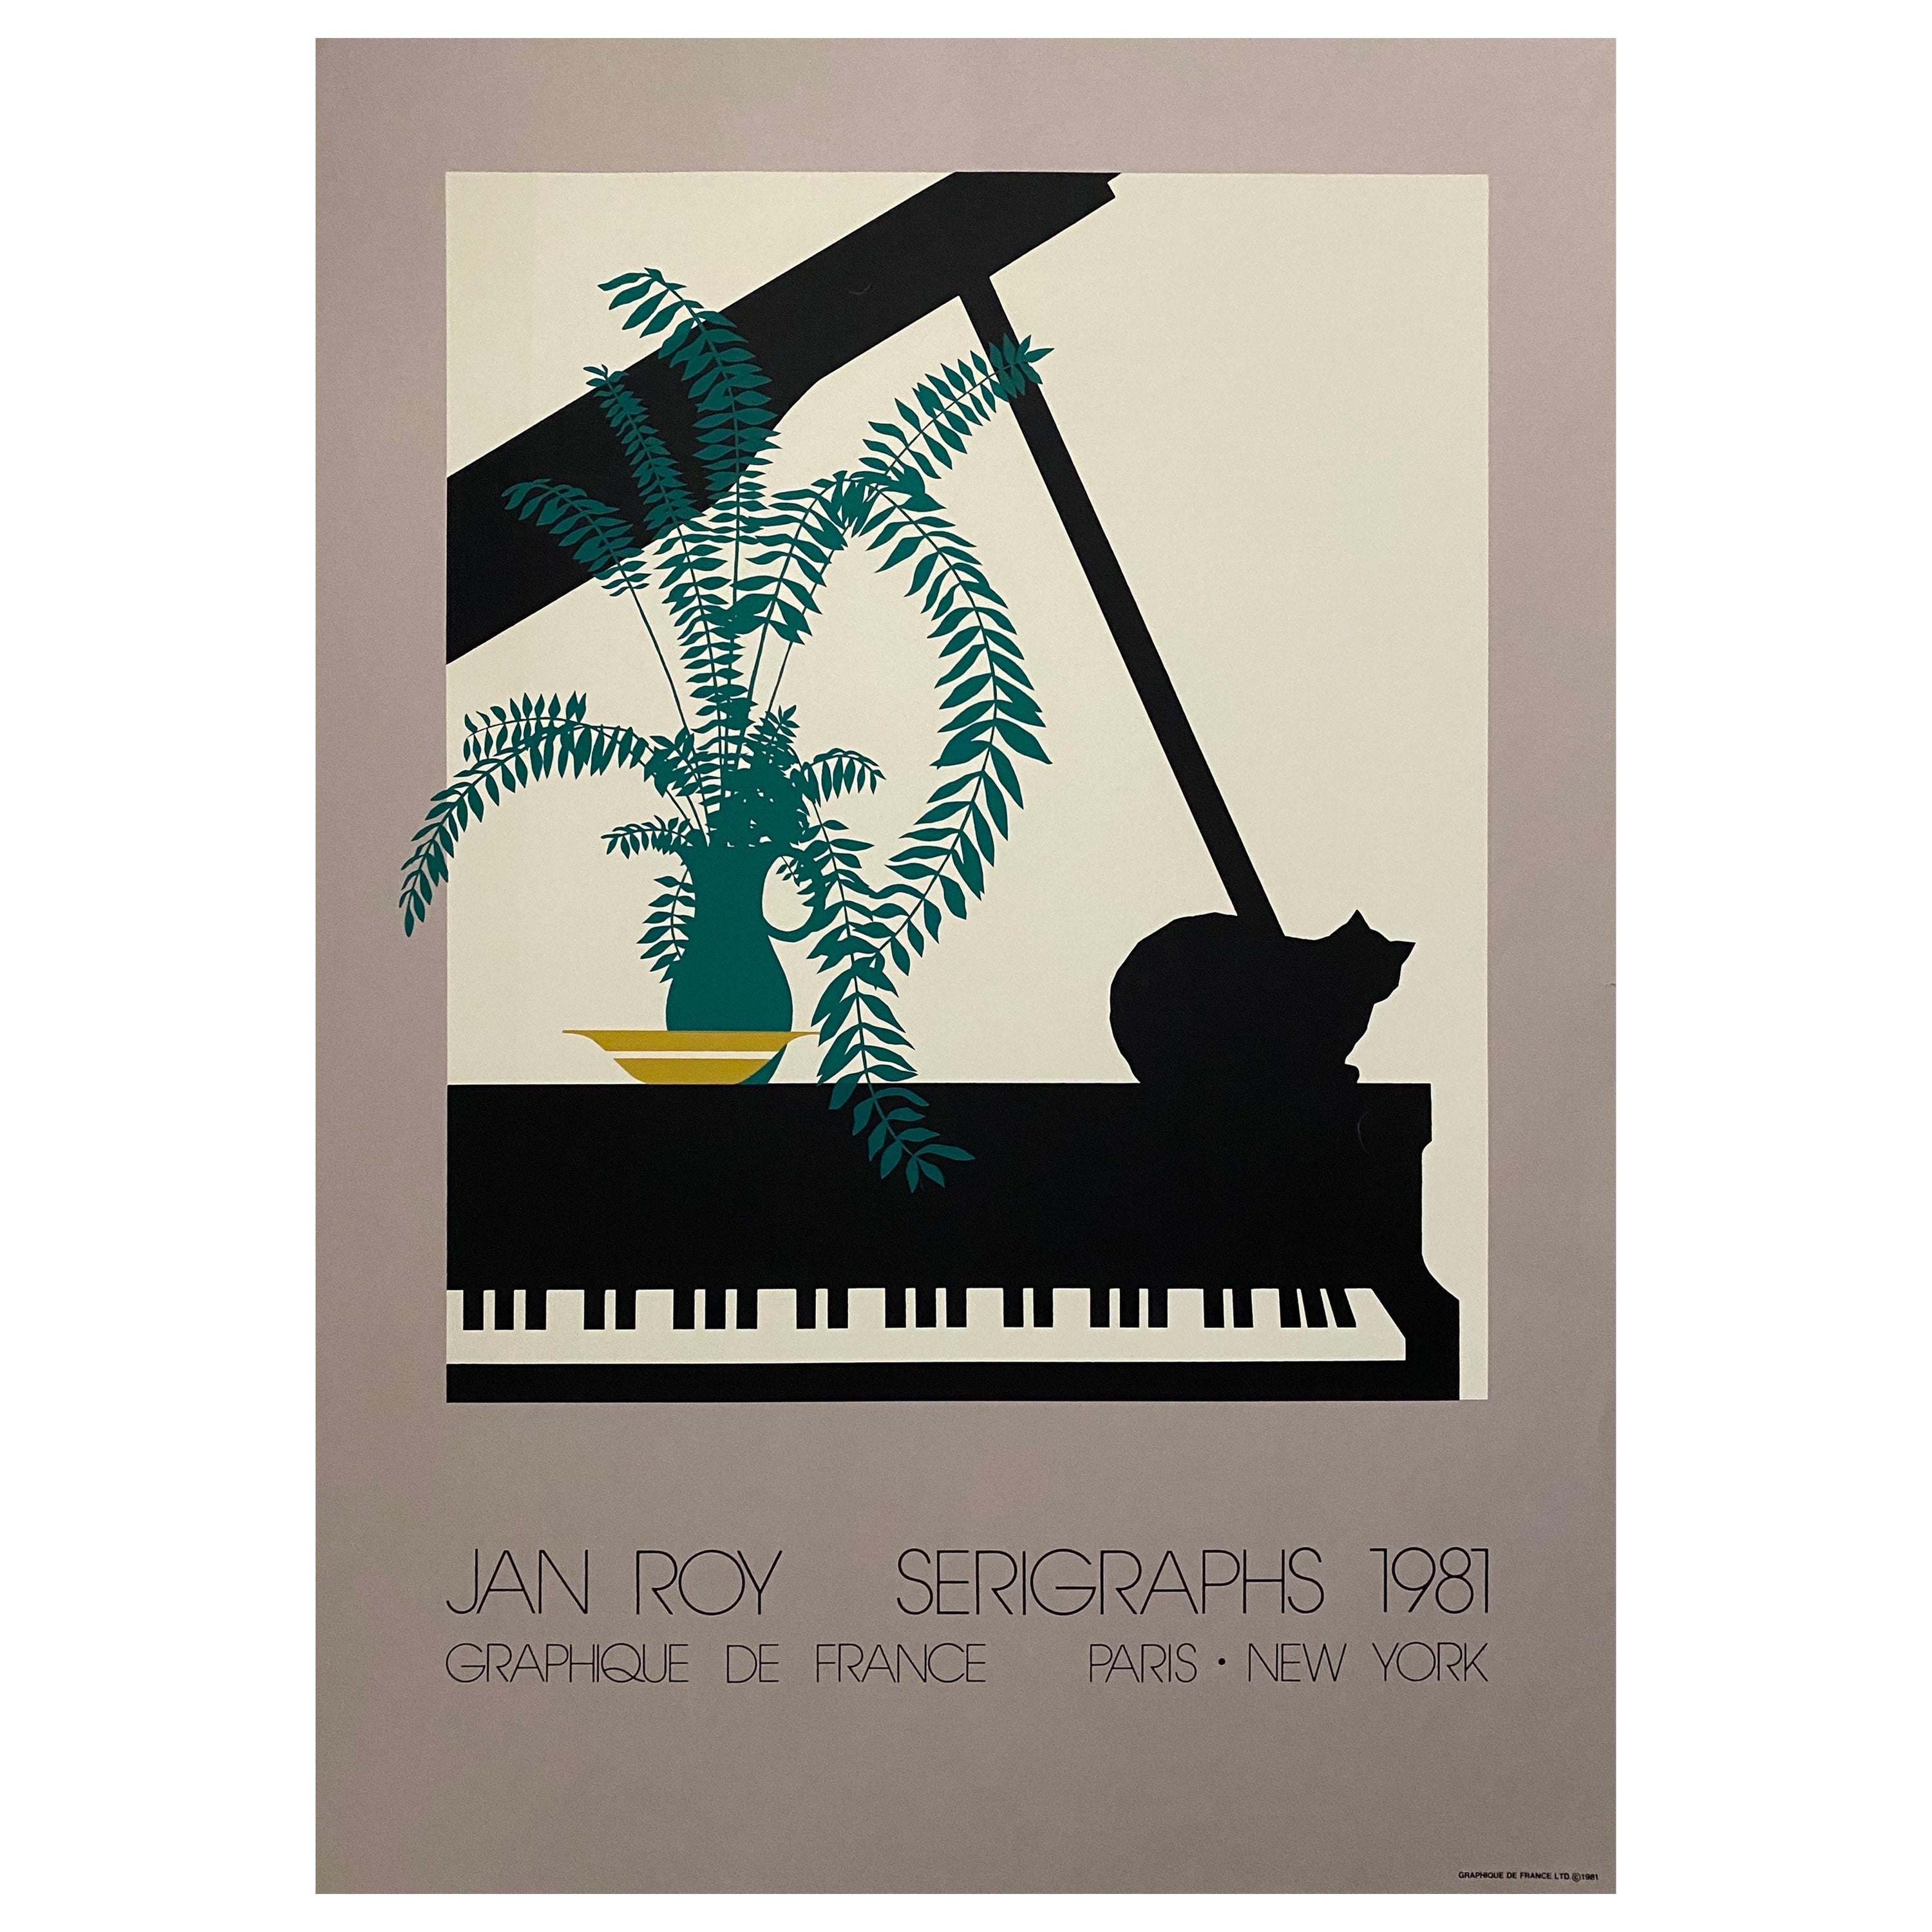 1981 Jan Roy "Chat au piano" Sérigraphie  